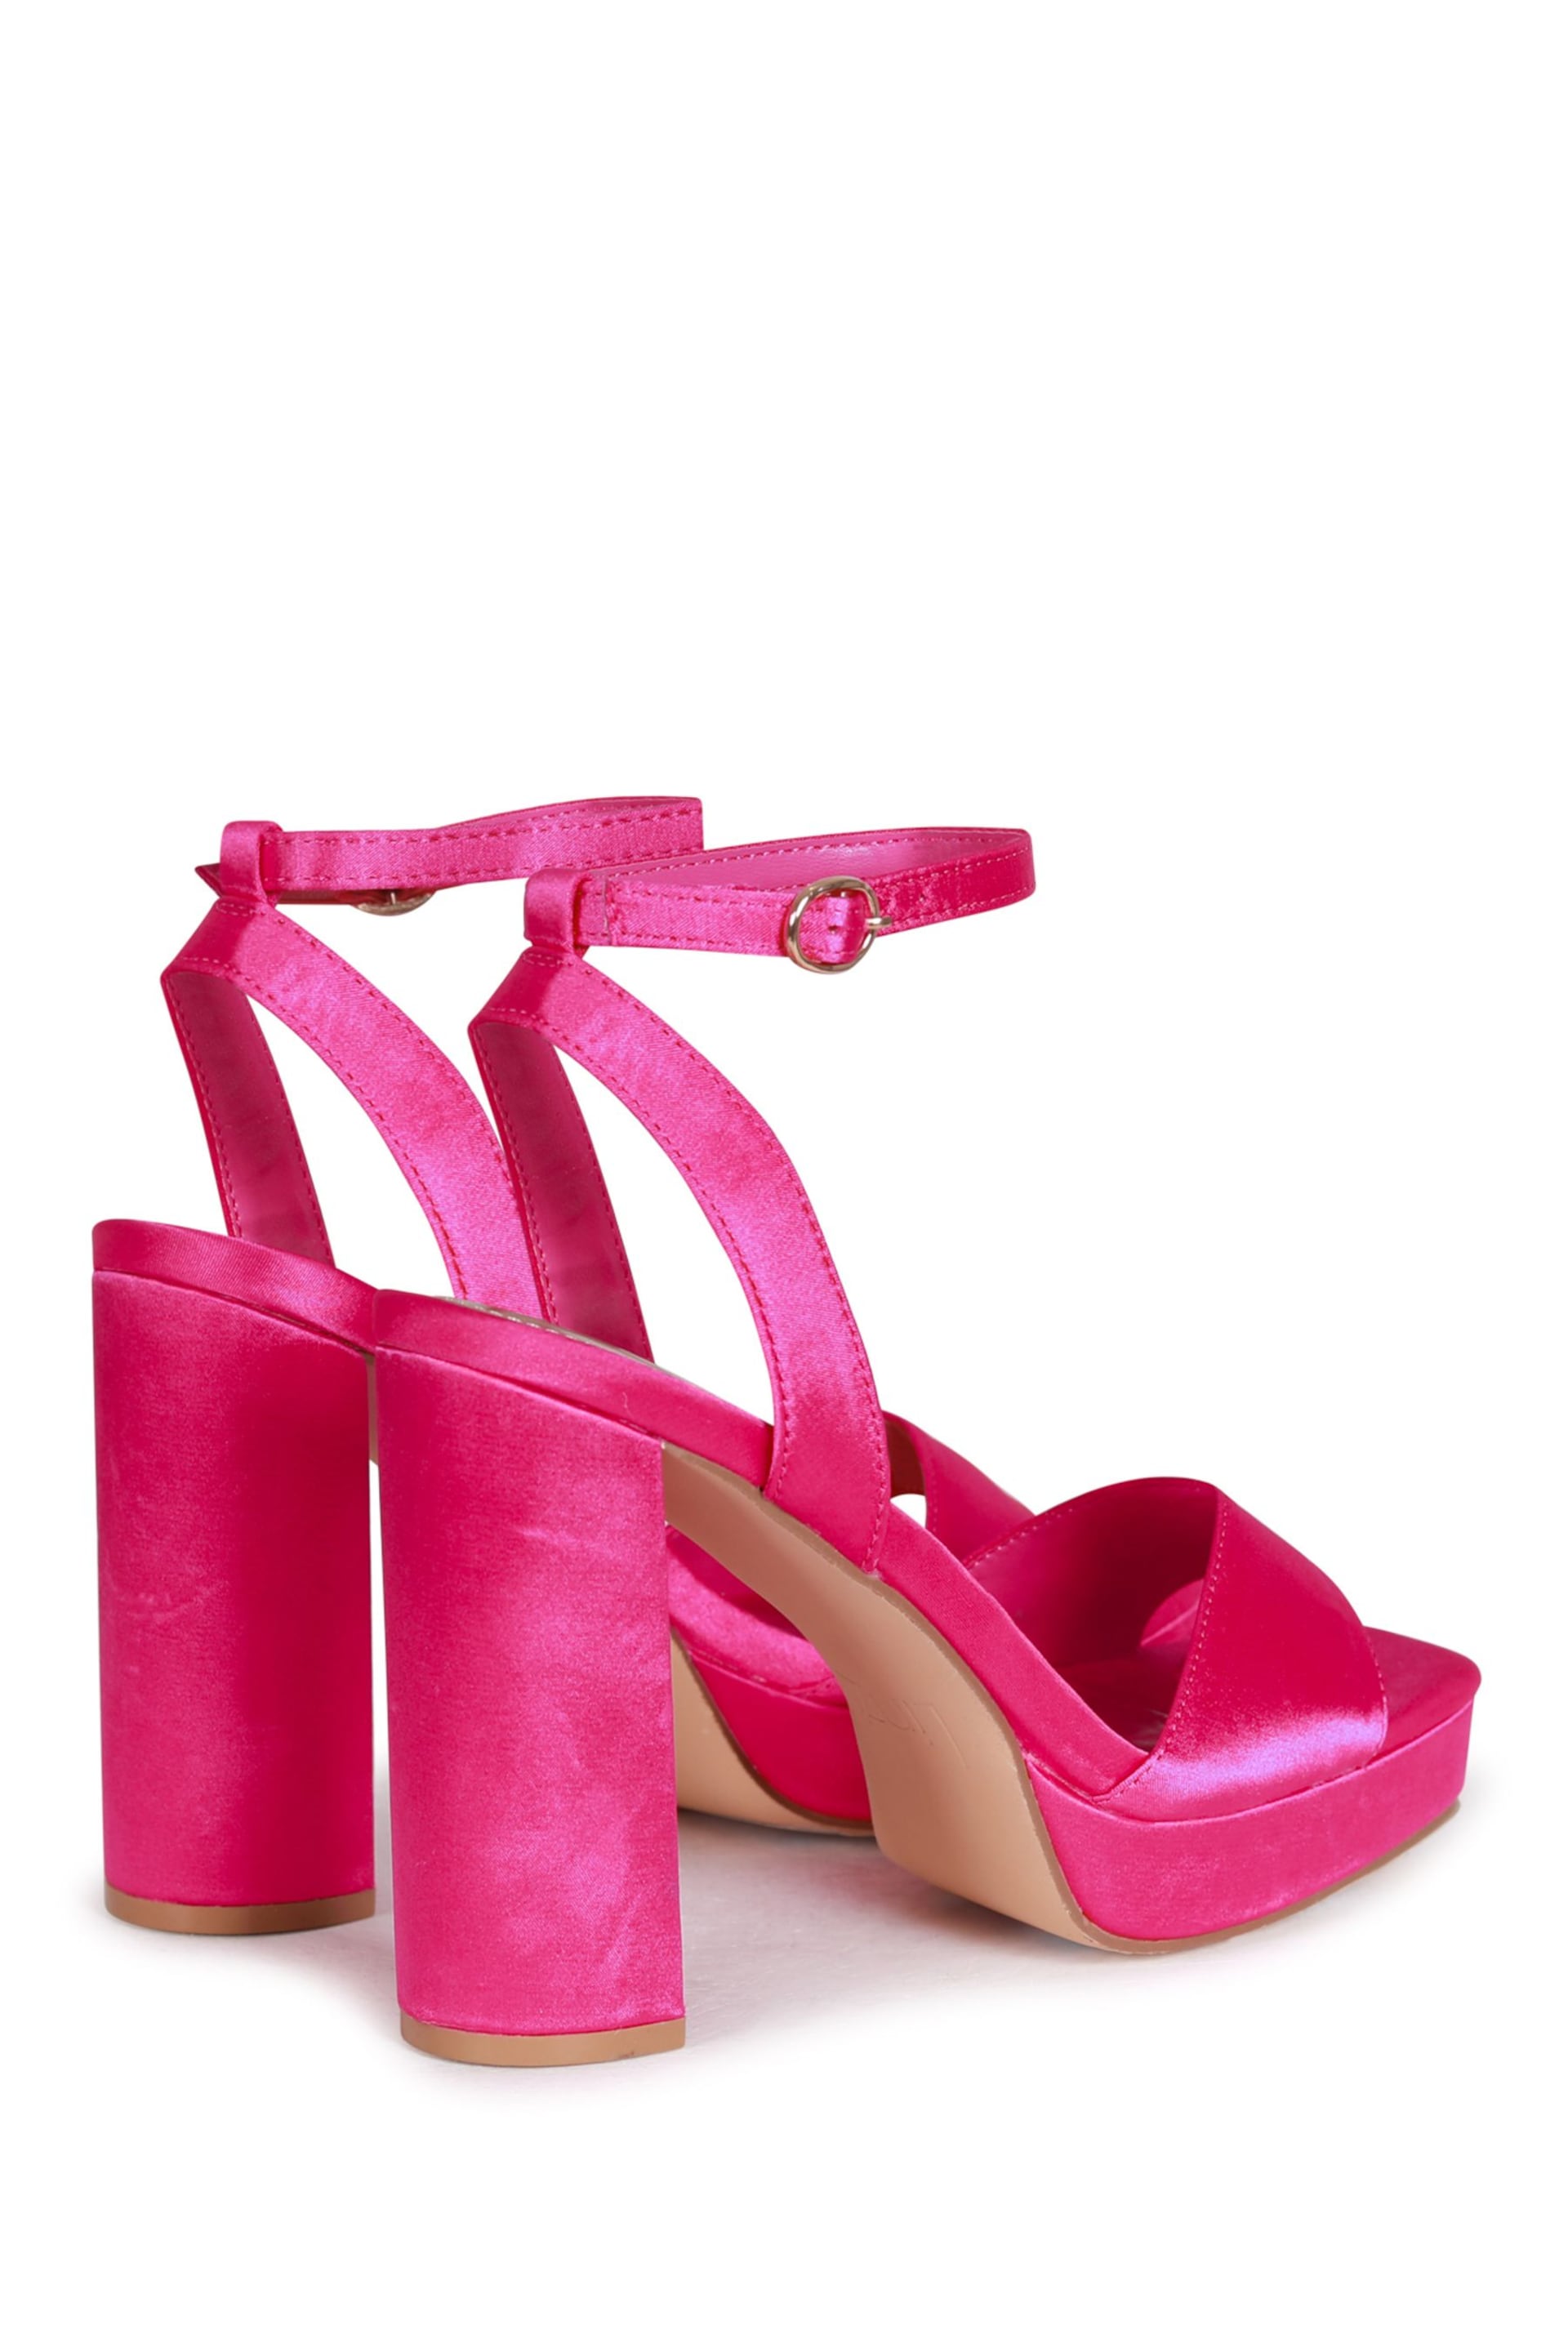 Linzi Pink Gloria Platform Heeled Sandals With Wrap Around Ankle Strap - Image 4 of 4